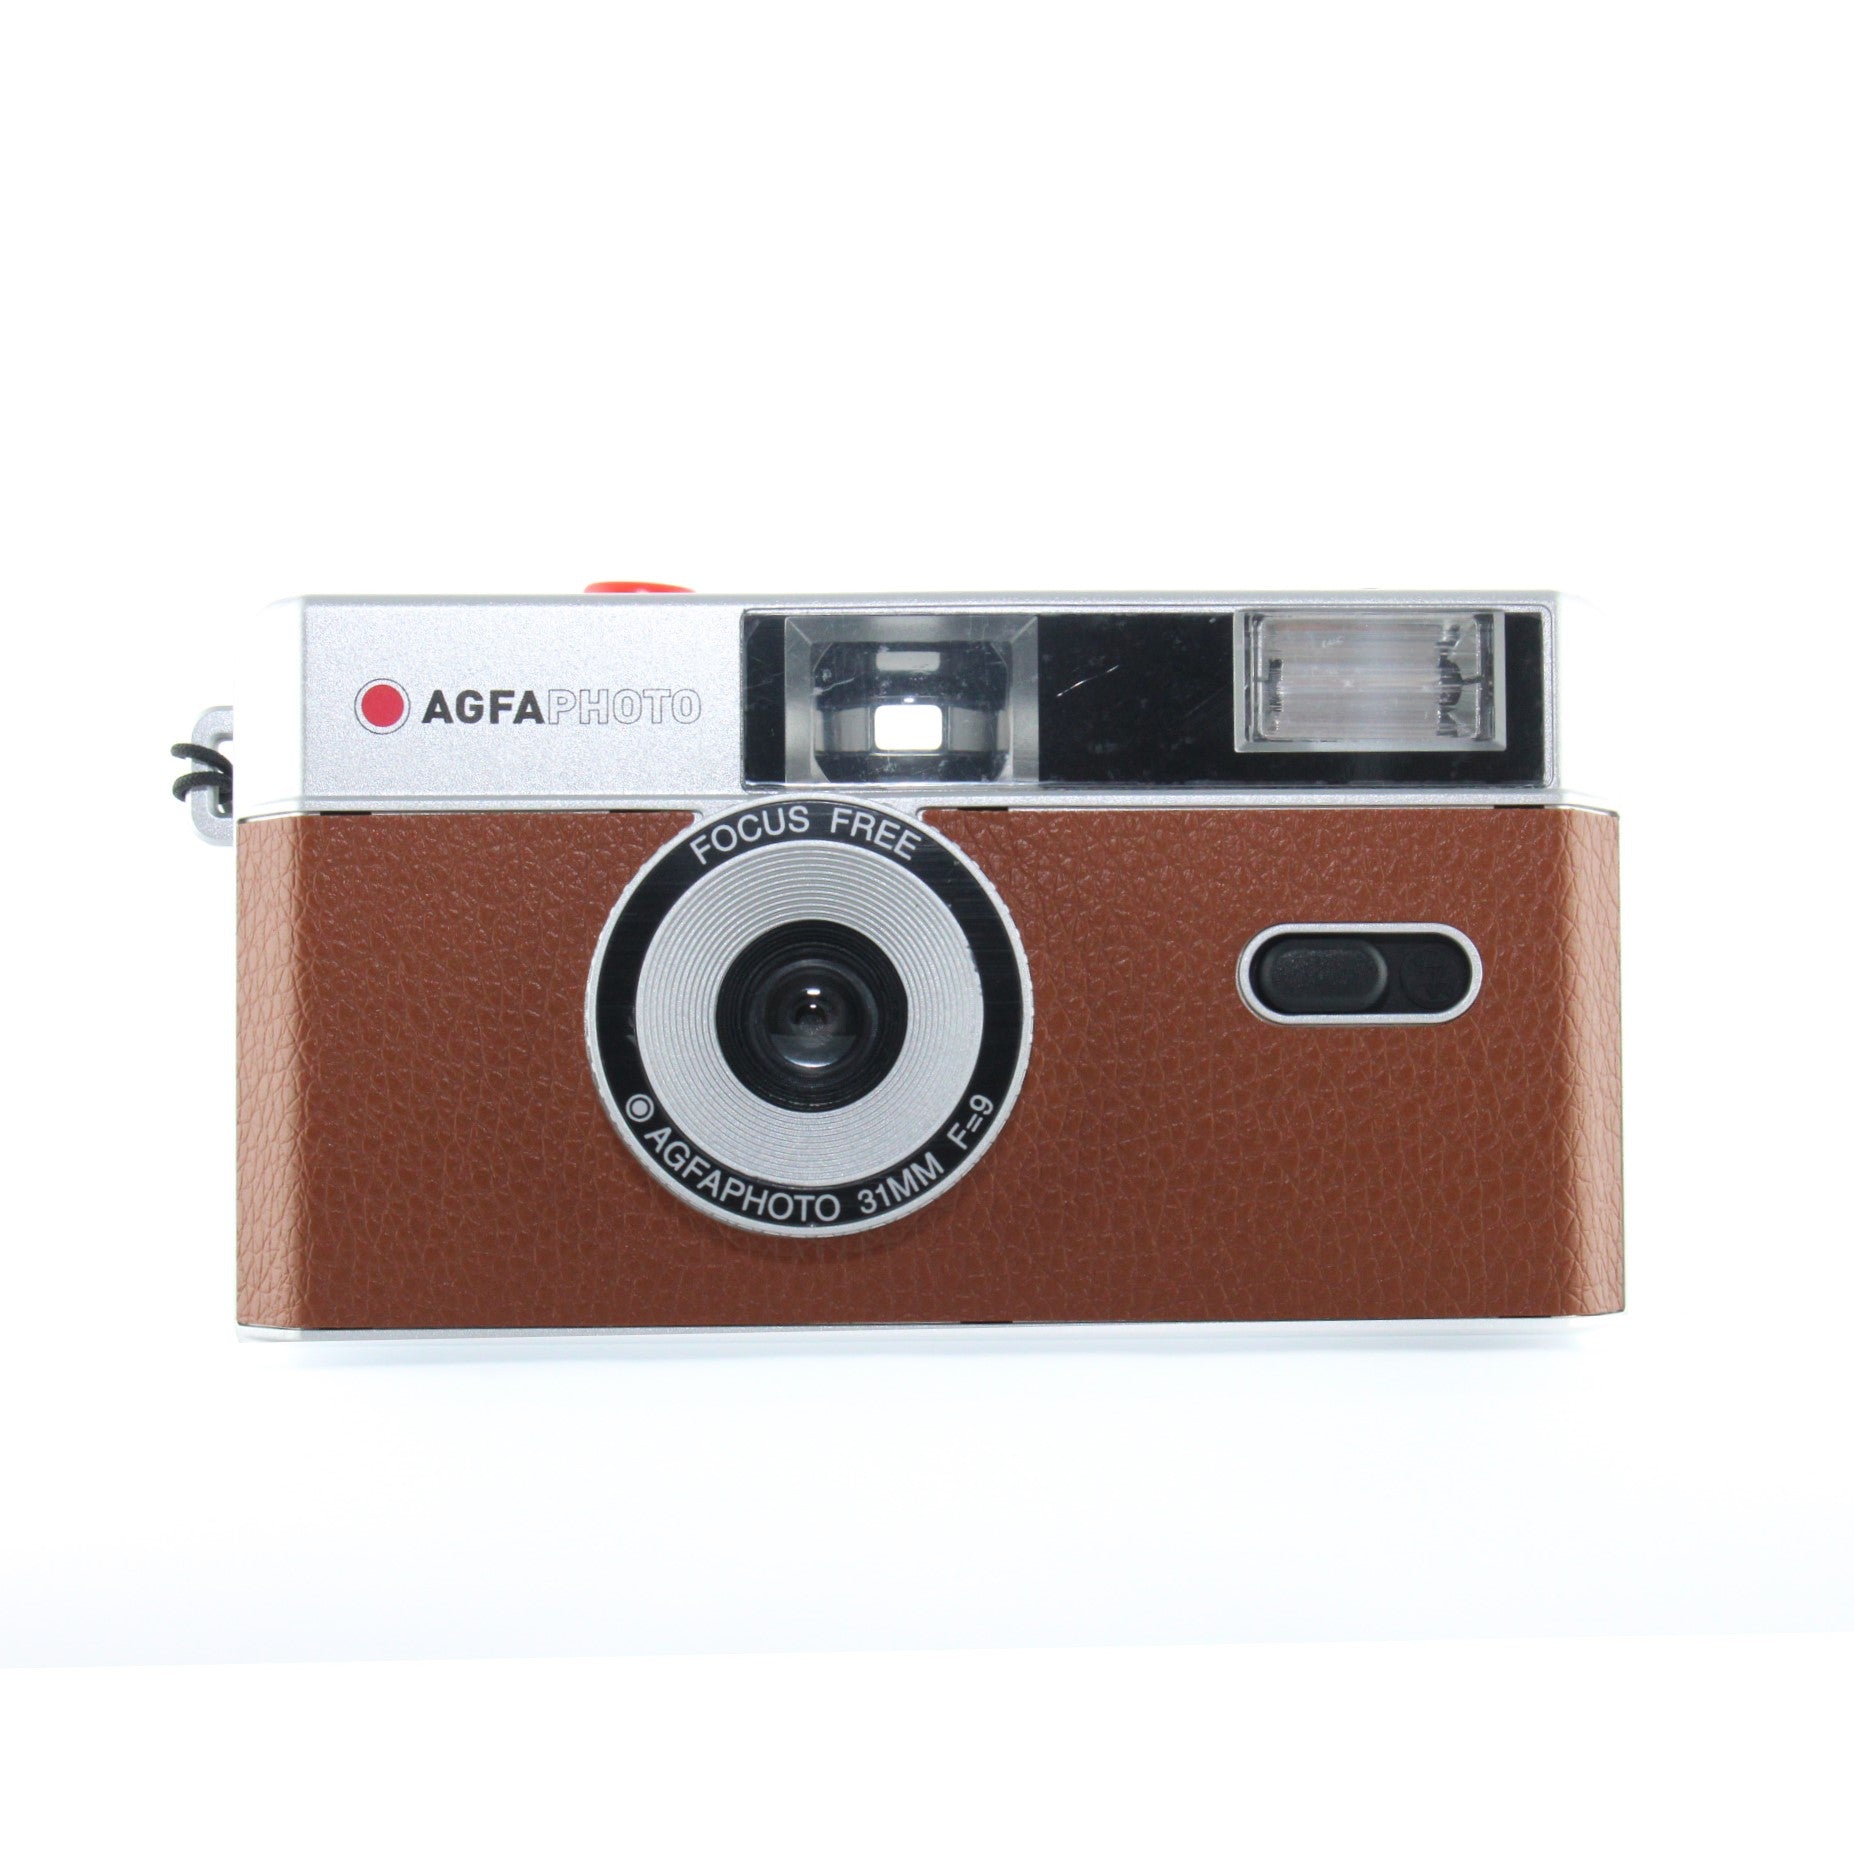 Agfa Photo Analogue 35mm Film Camera Kit